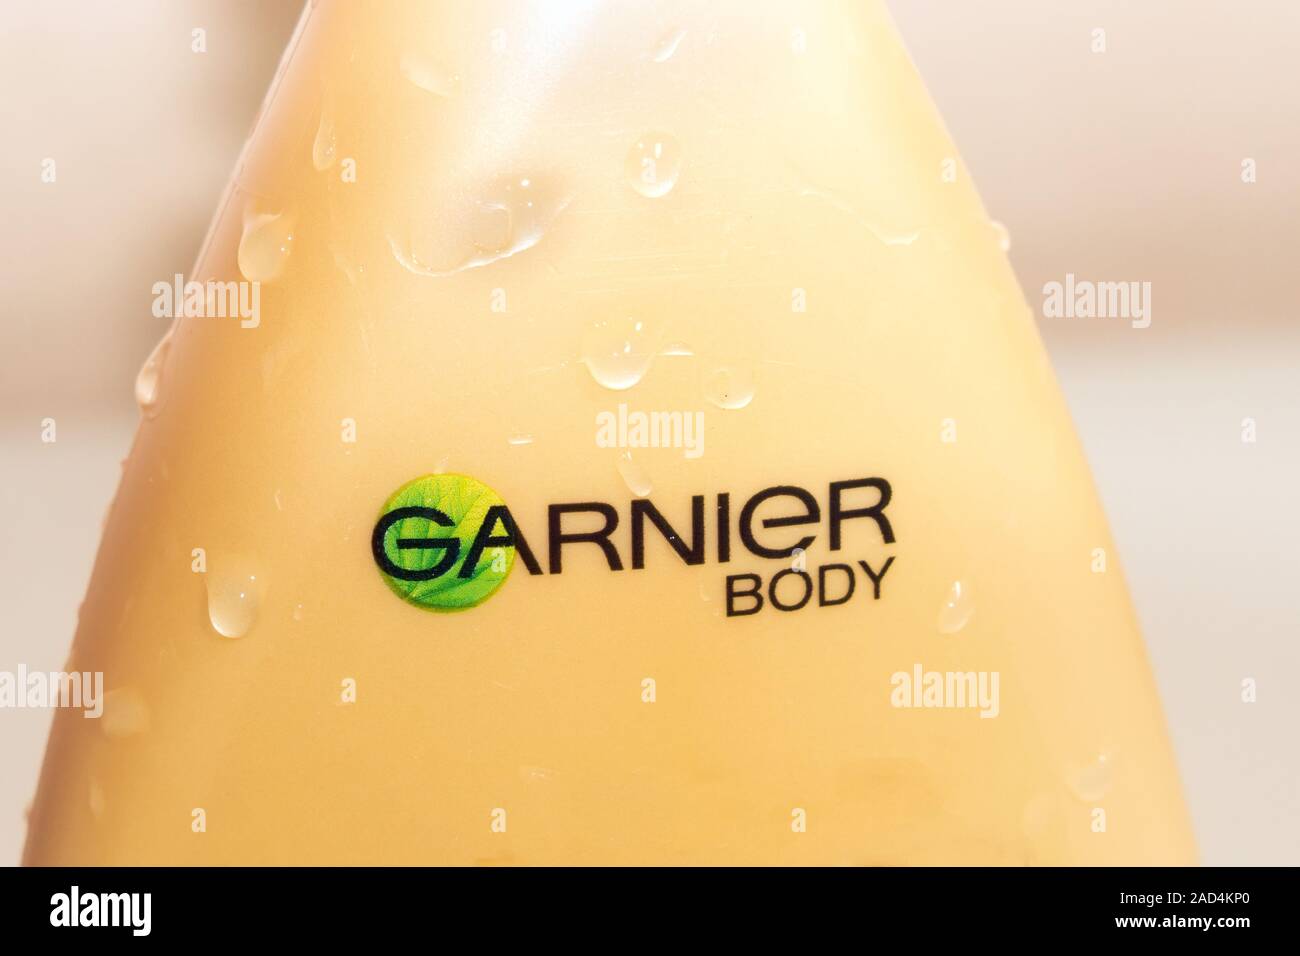 Tioumen, Russie - 25 novembre 2019 : garnier logo bobody close-up. Shampooing cheveux lait Garnier Banque D'Images